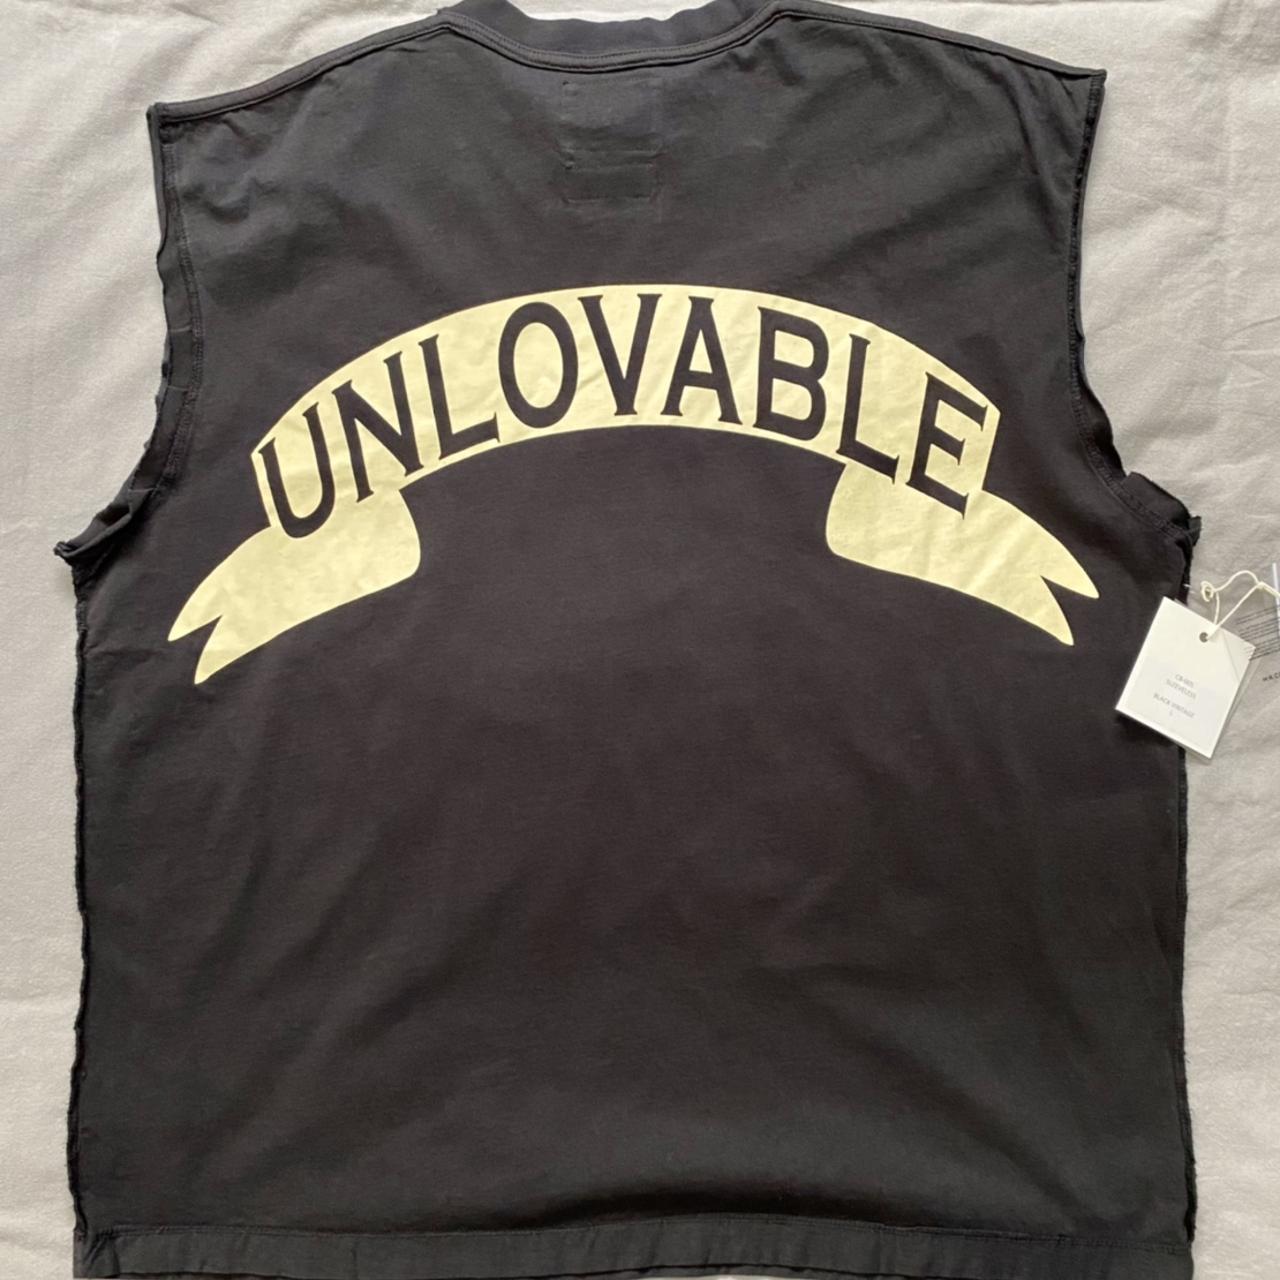 Product Image 2 - Mr. Completely Unlovable Sleeveless shirt.